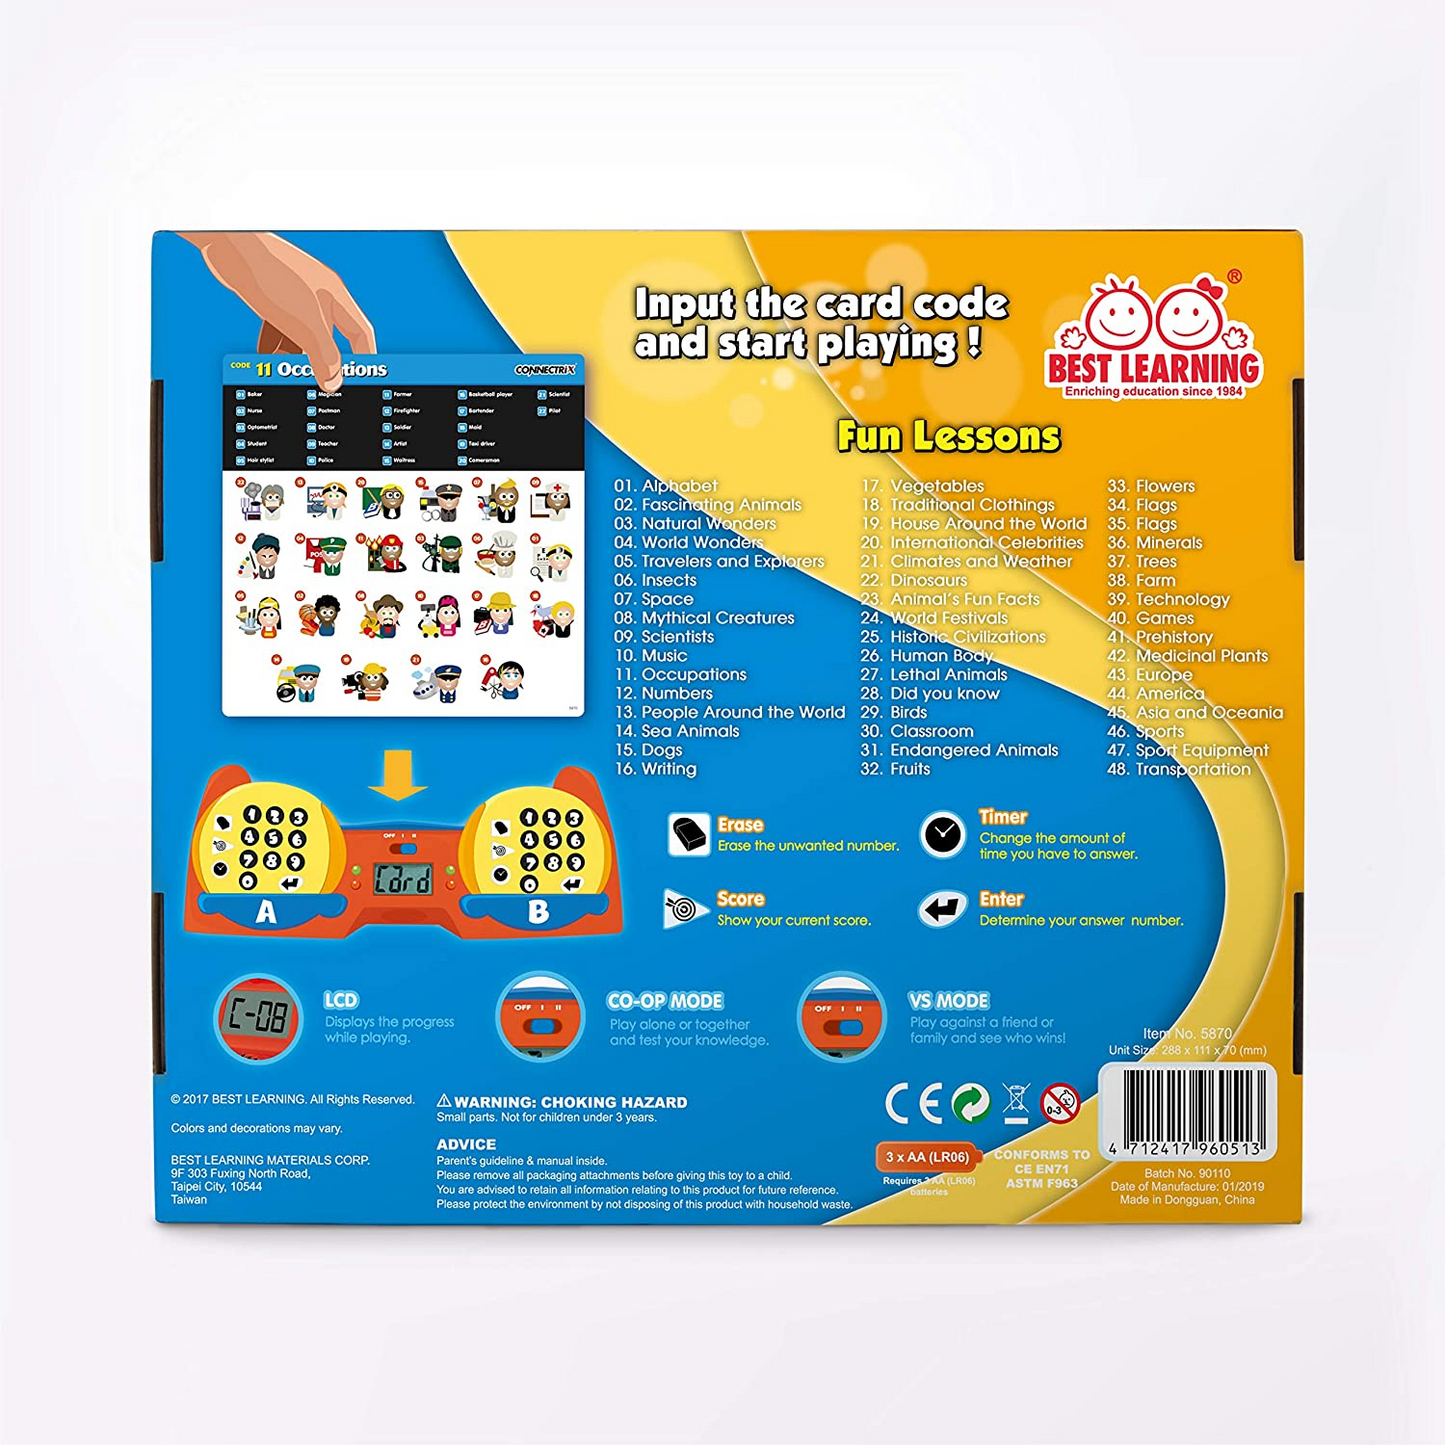 BEST LEARNING Connectrix - Brinquedo de jogo educacional emocionante para crianças de 1 a 2 jogadores